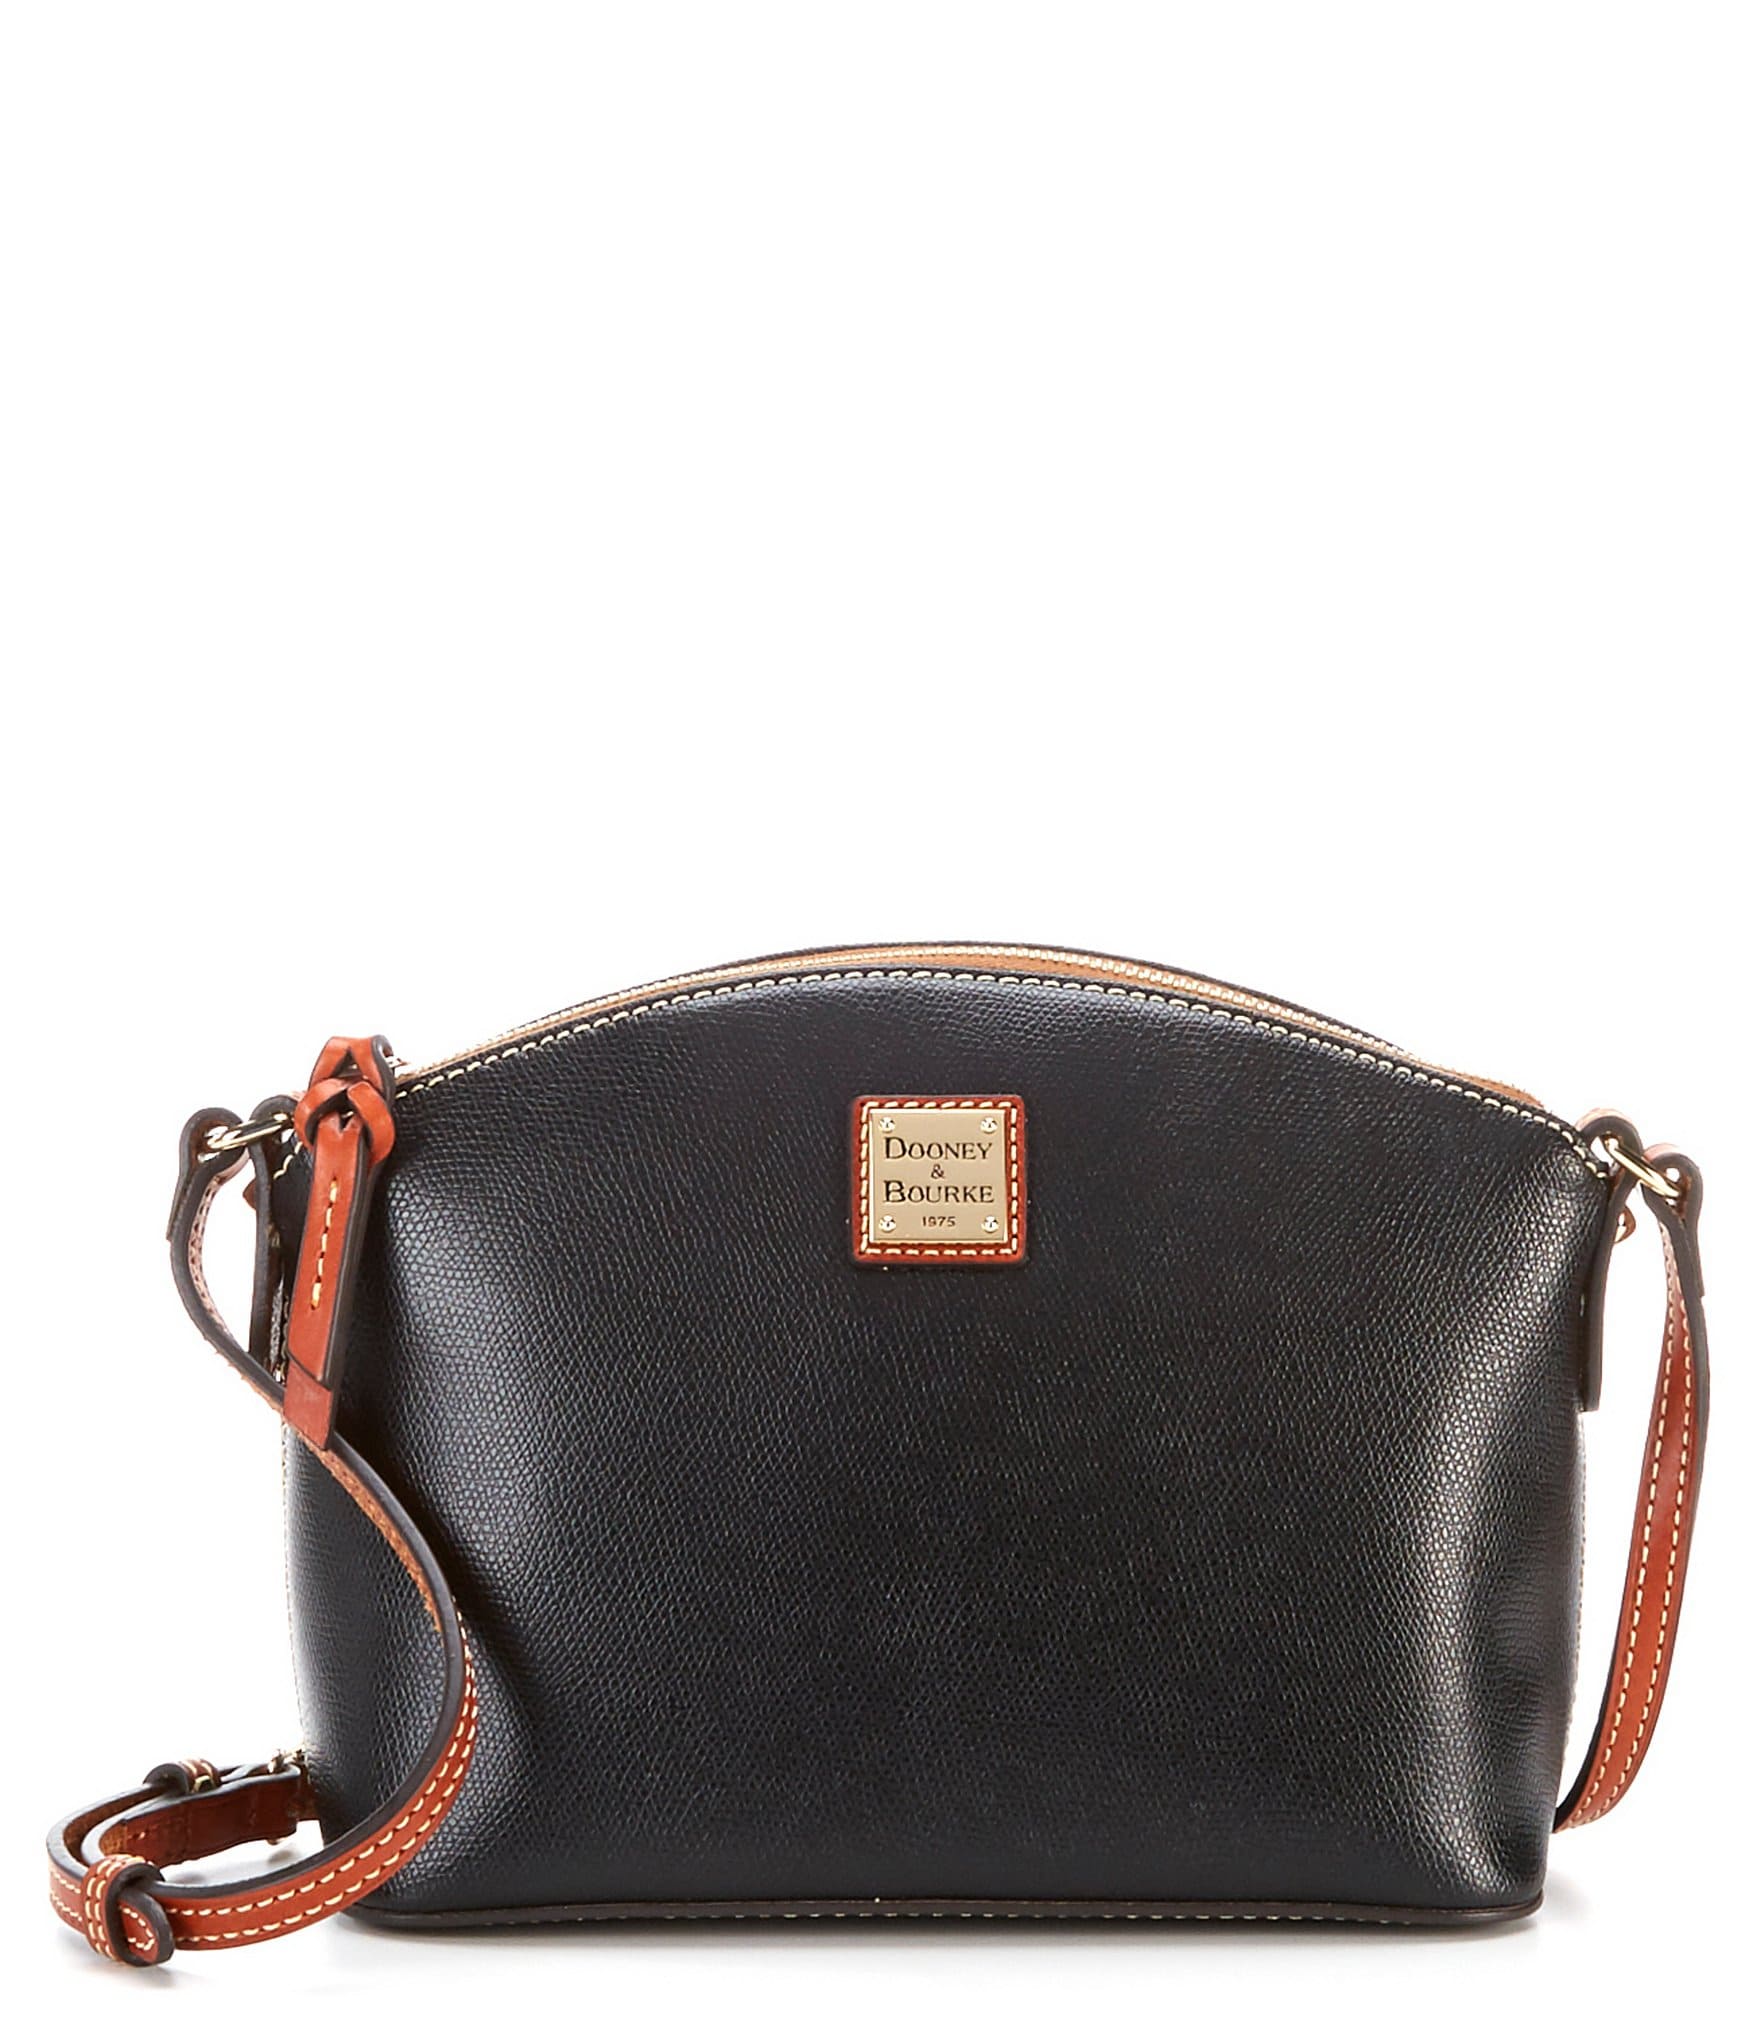 Dillards Leather Handbags | IUCN Water